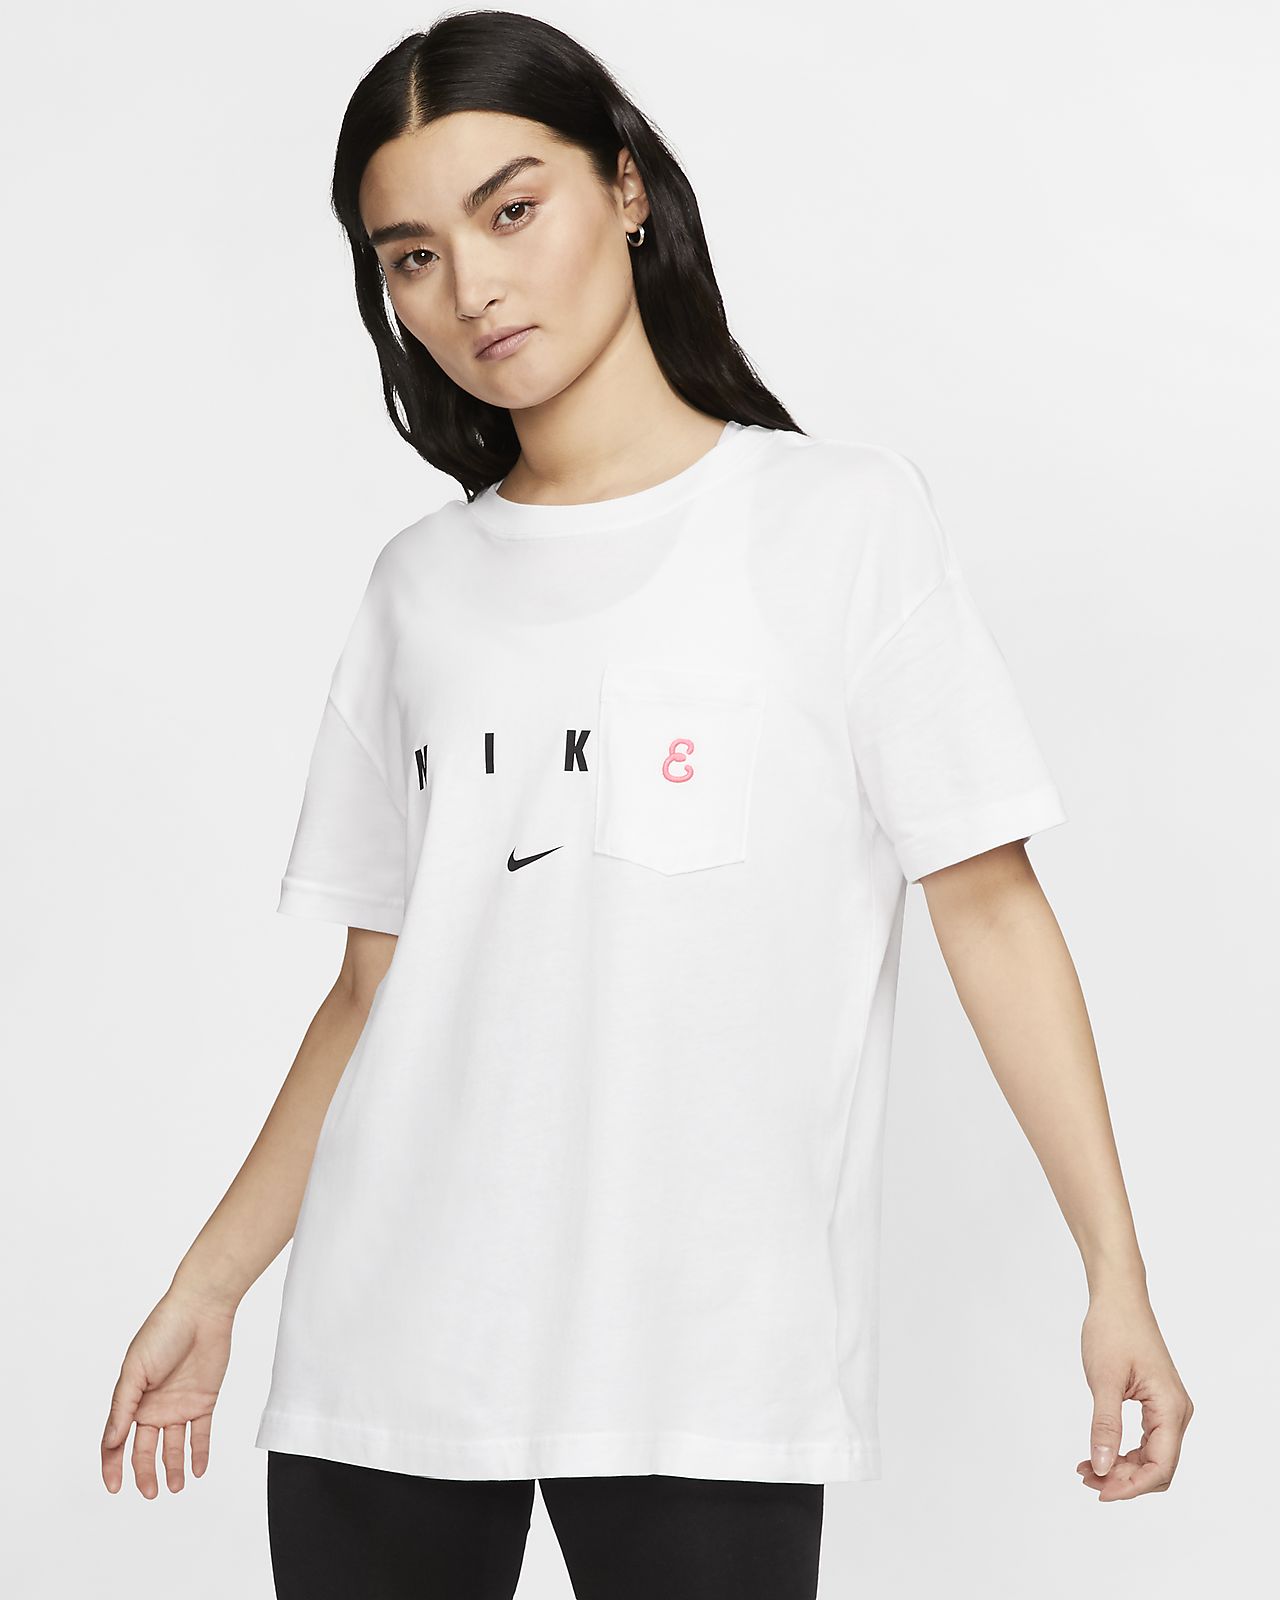 Buy > nike oversized shirt > in stock